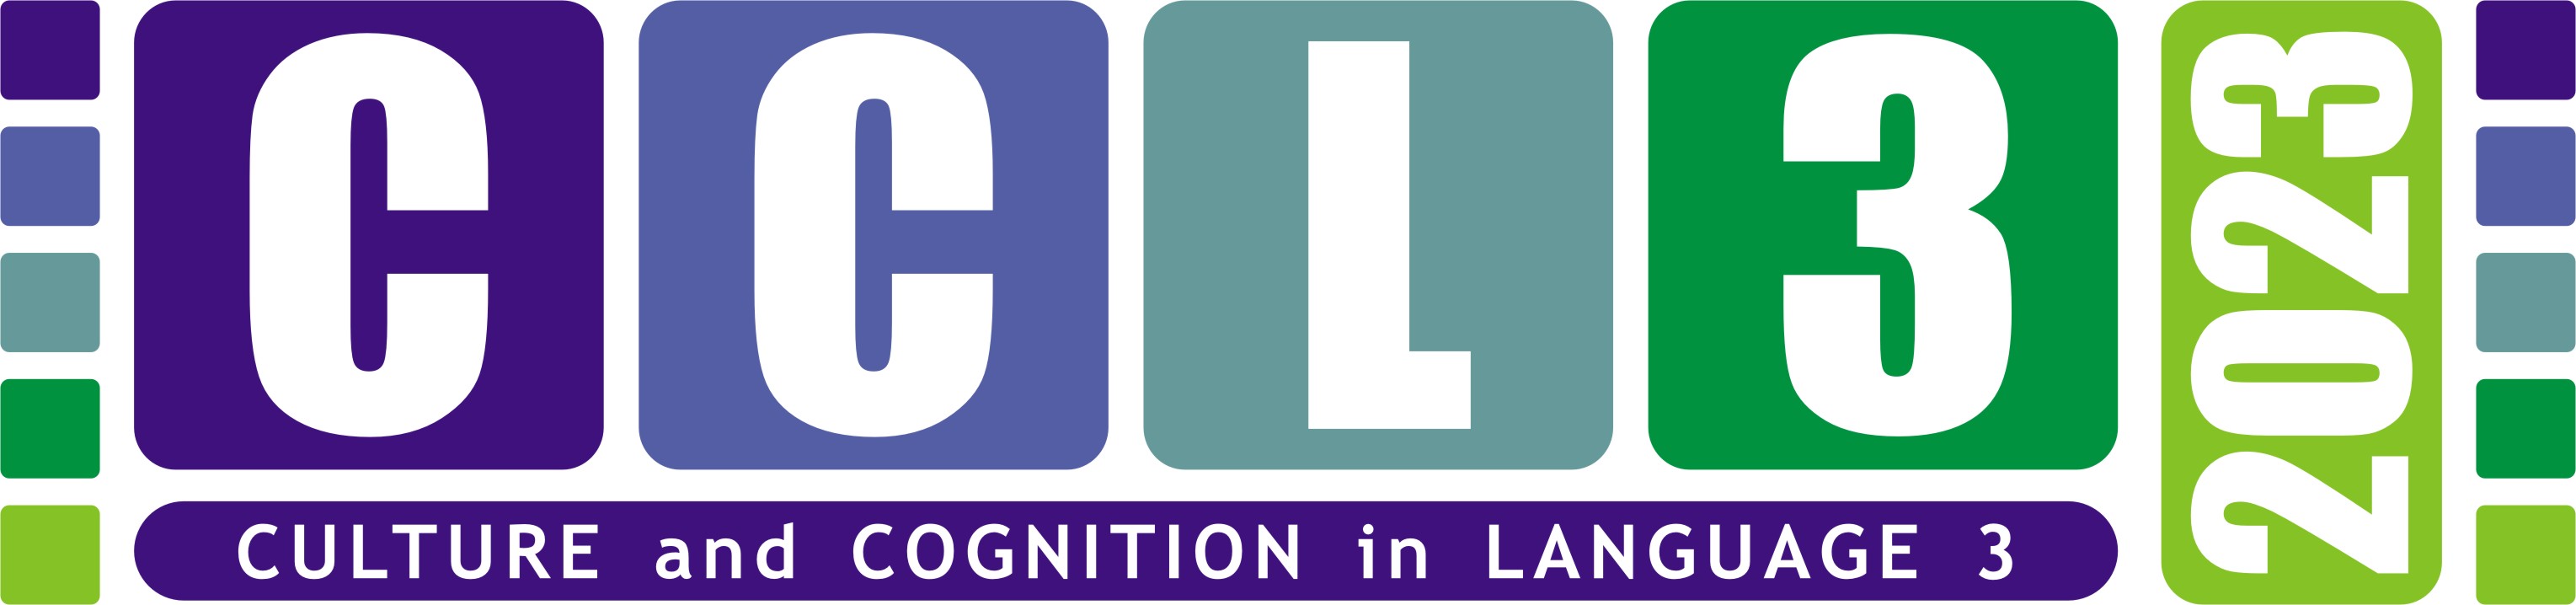 ccl 3 logo 4.JPG [183.91 KB]